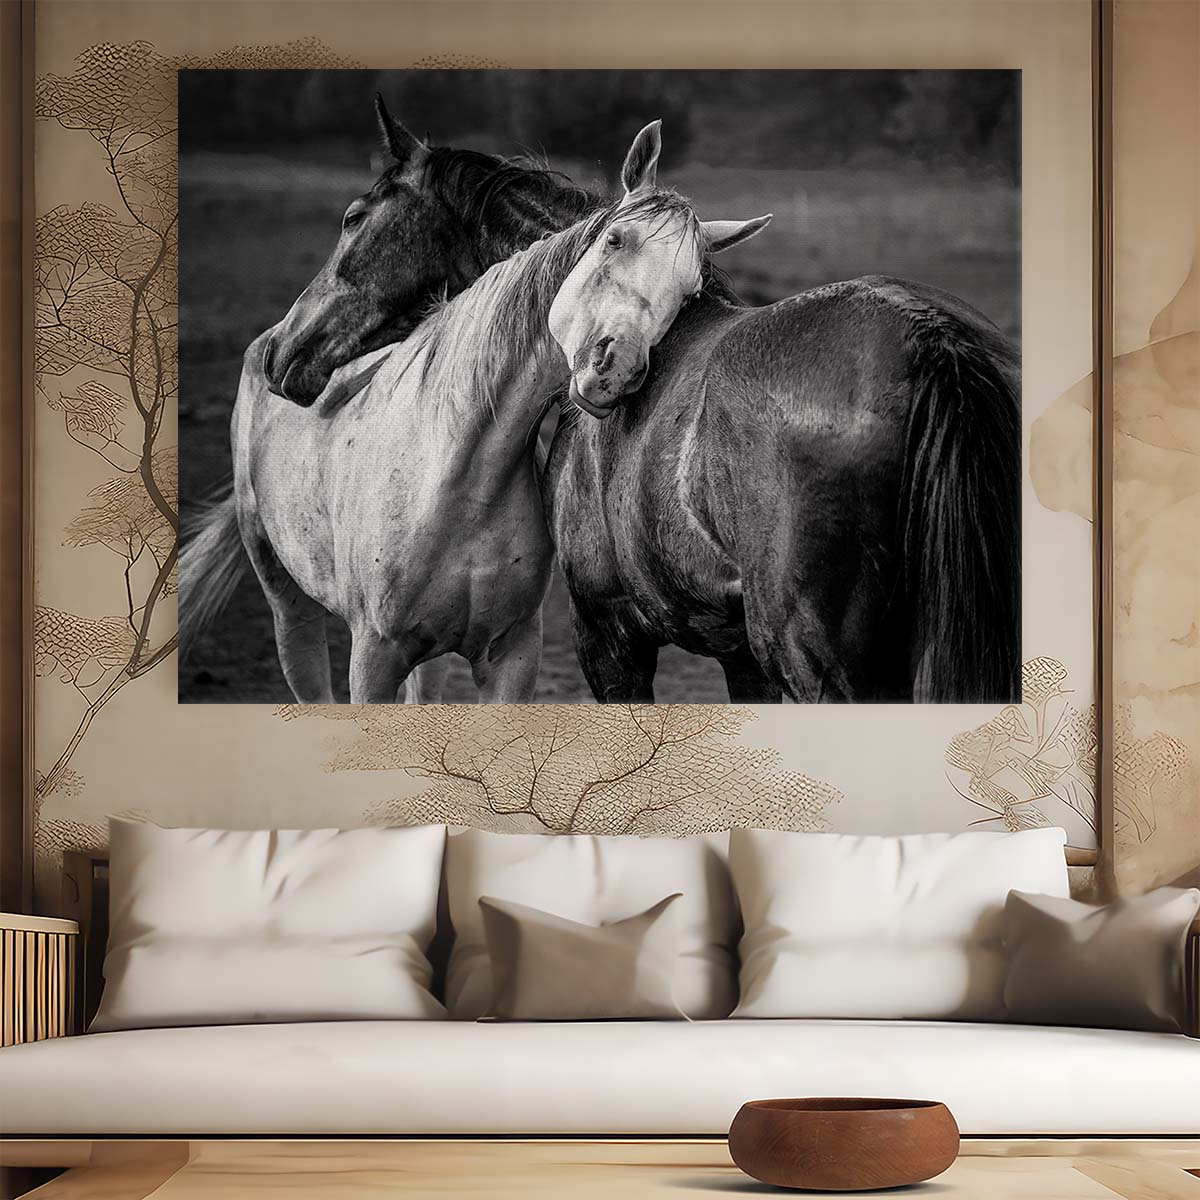 Embracing Horses in Rain Monochrome Equestrian Love Photography Wall Art